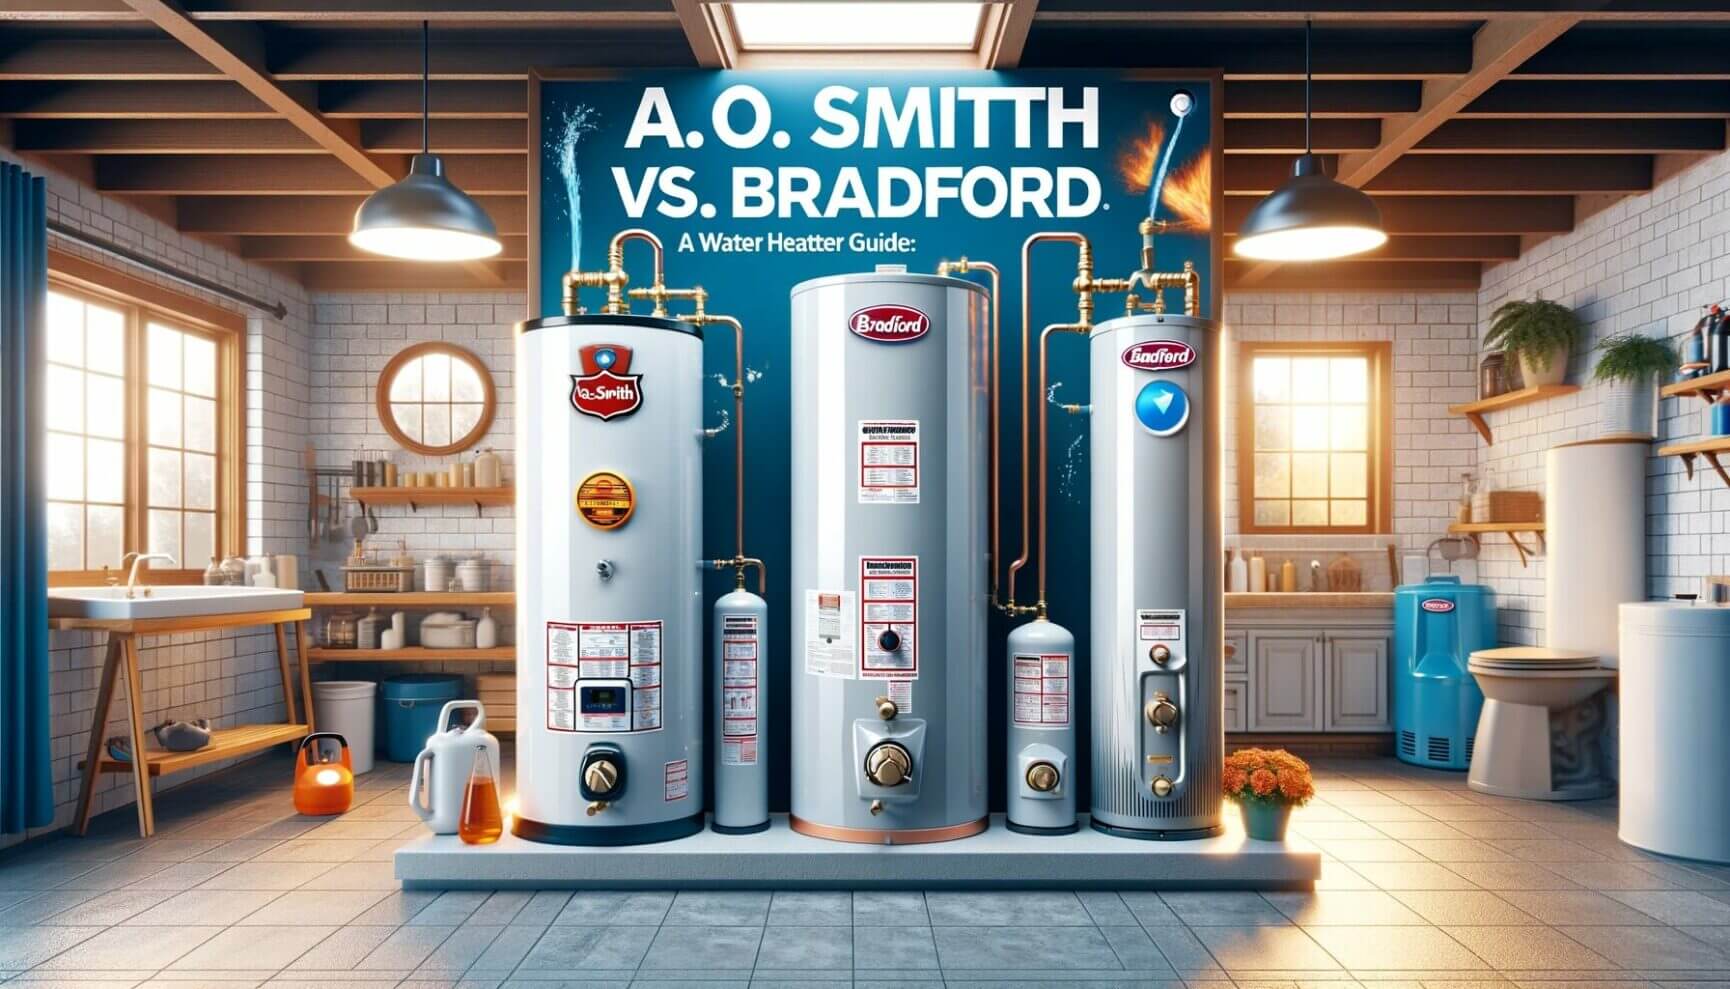 Aq smith vs bradford water heaters.